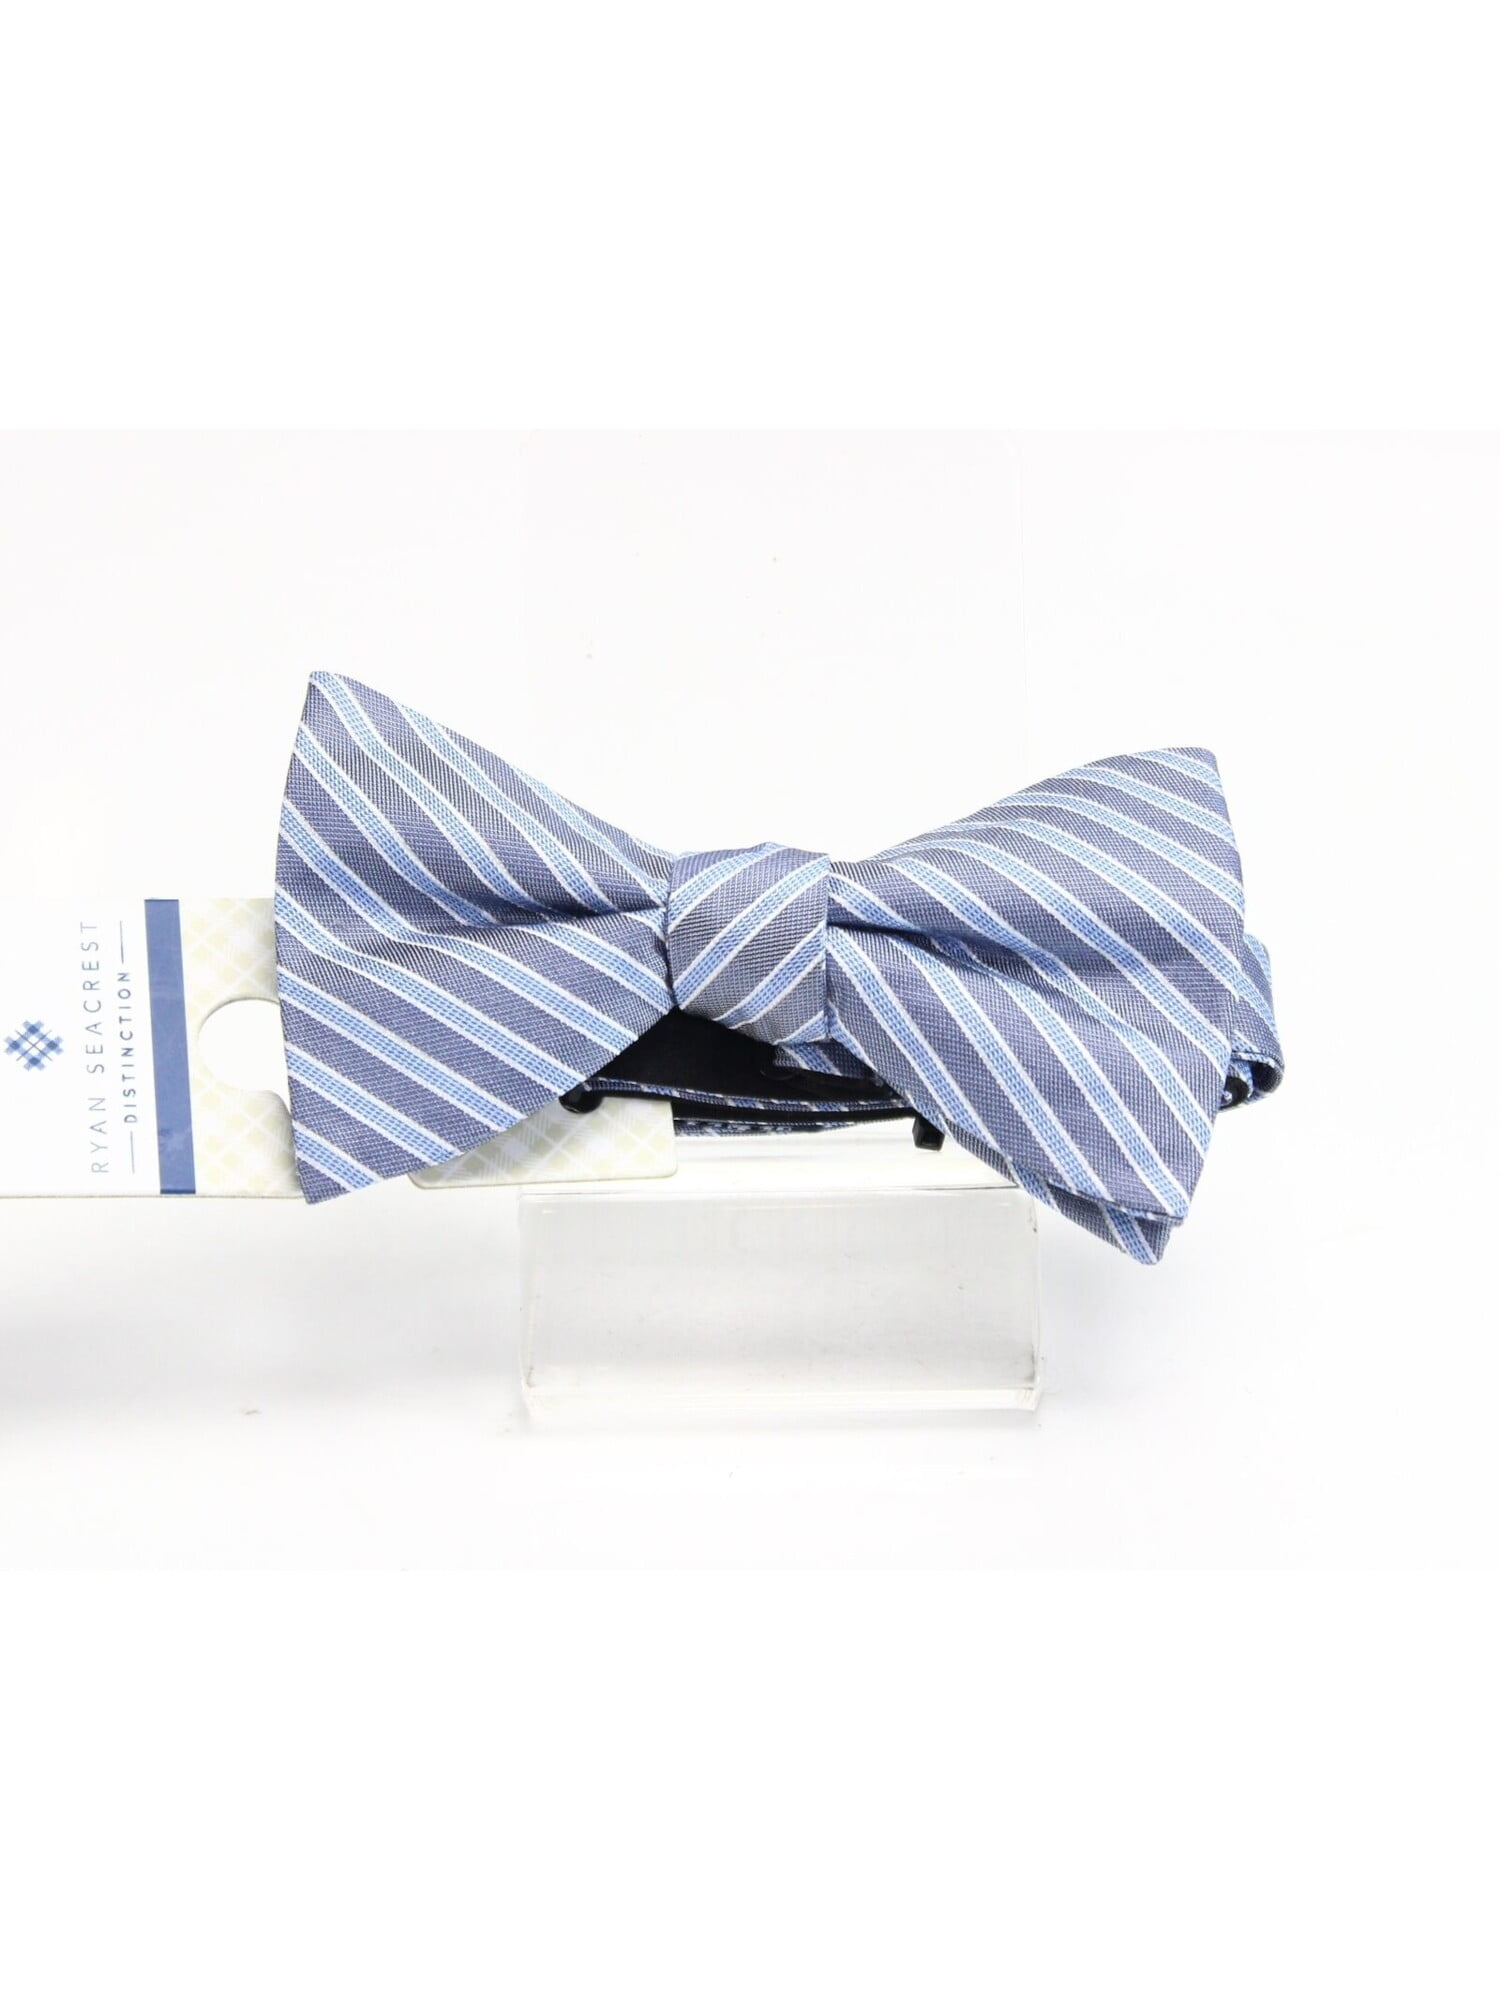 New Ryan Seacrest Distinction Choice of Design/Color Bow Tie 